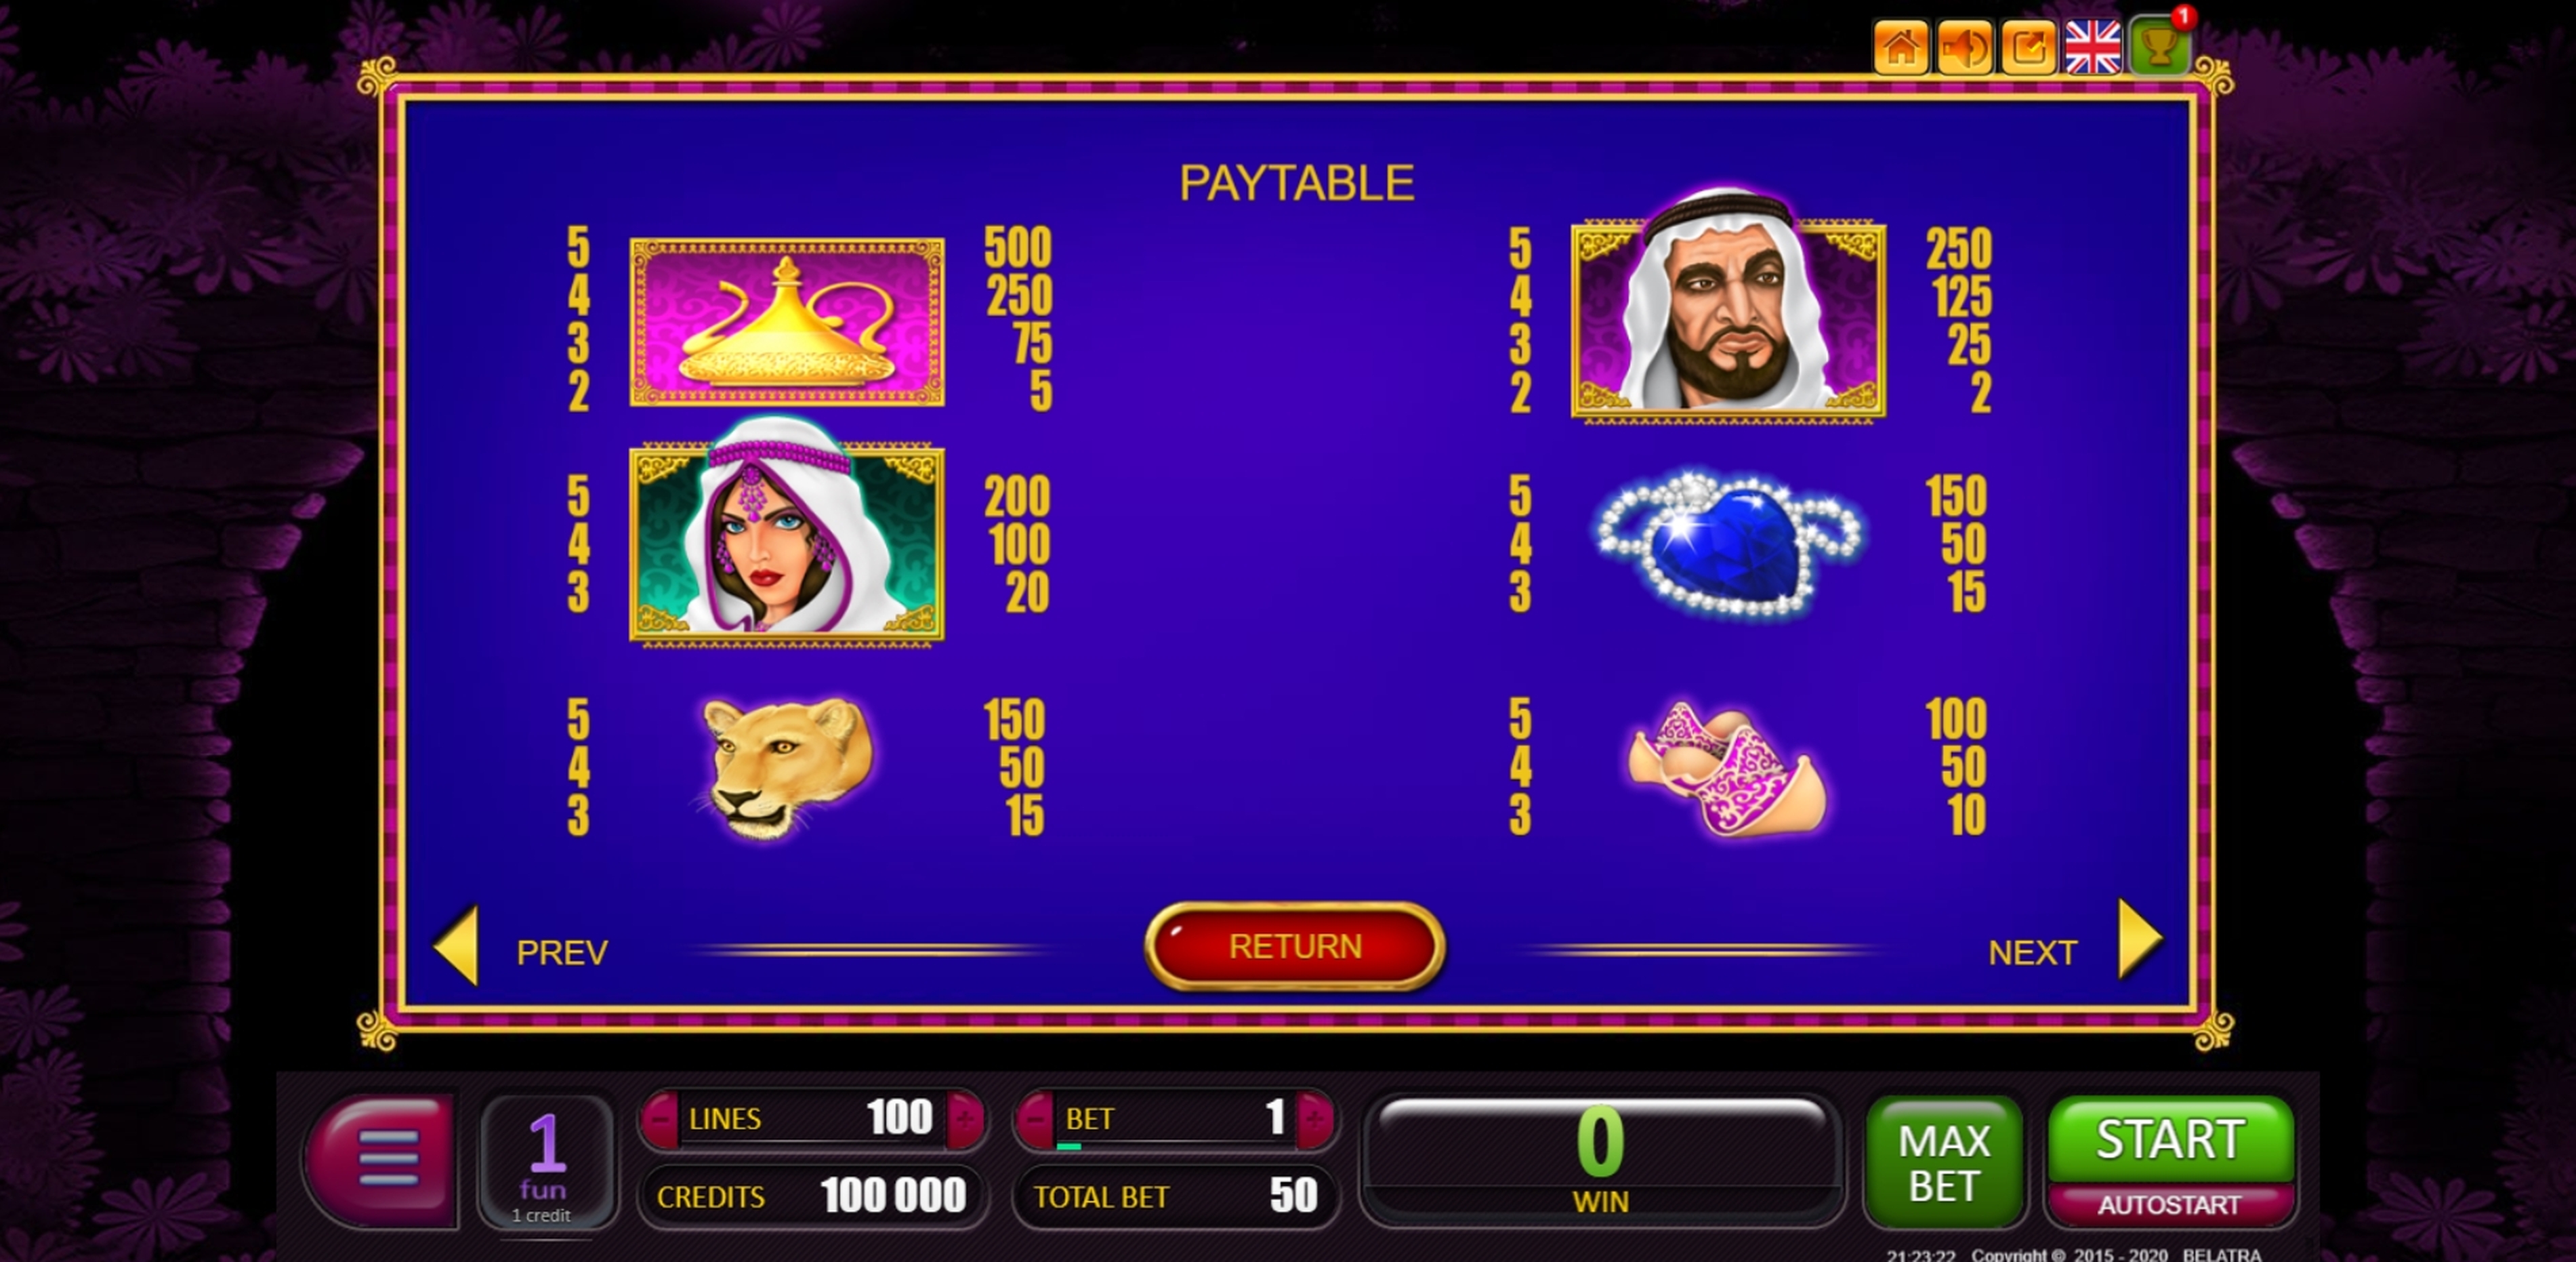 Info of The Moneymania Slot Game by Belatra Games